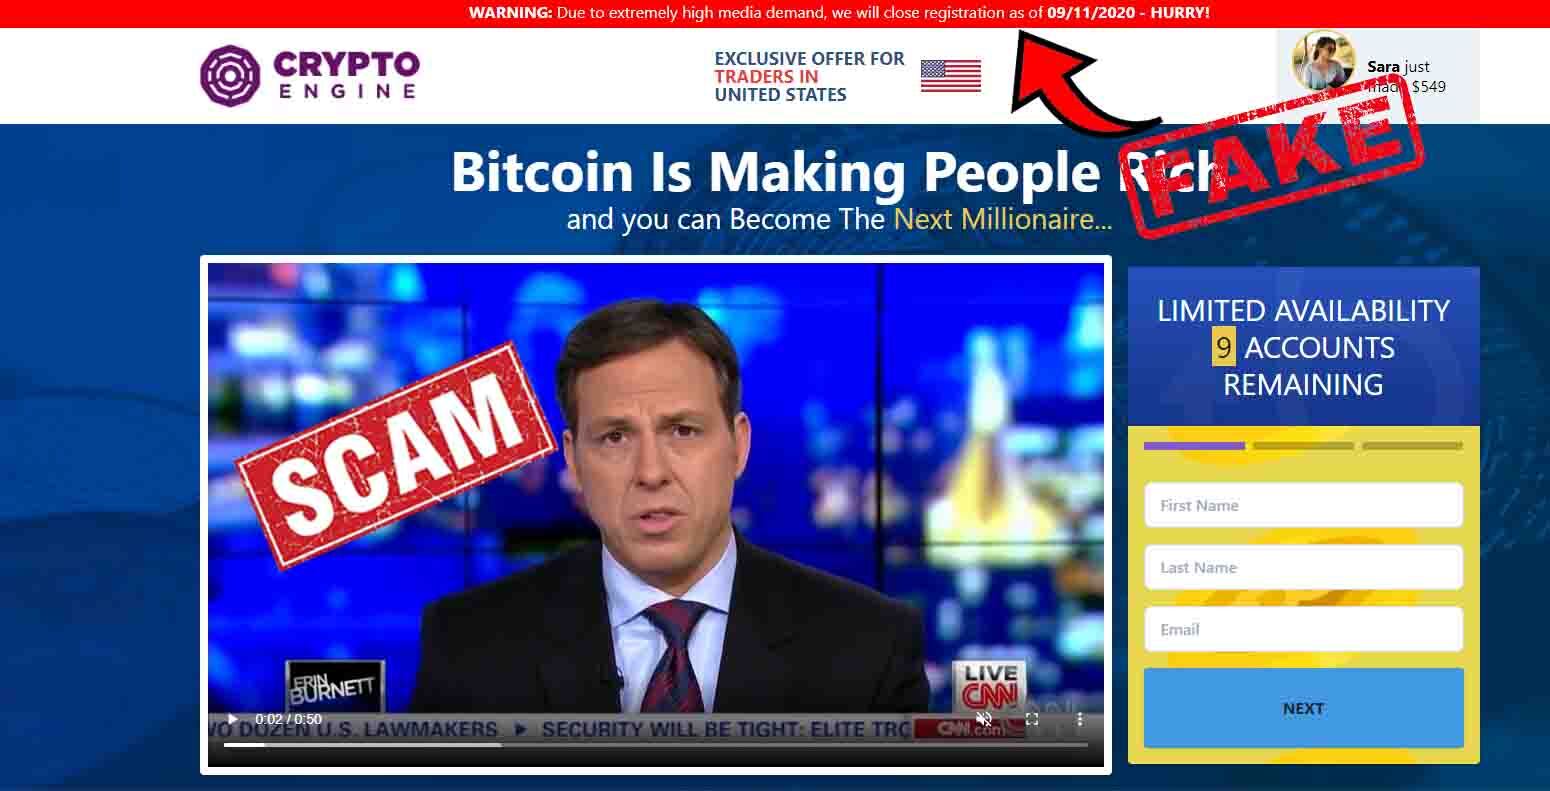 crypto engine fake media news